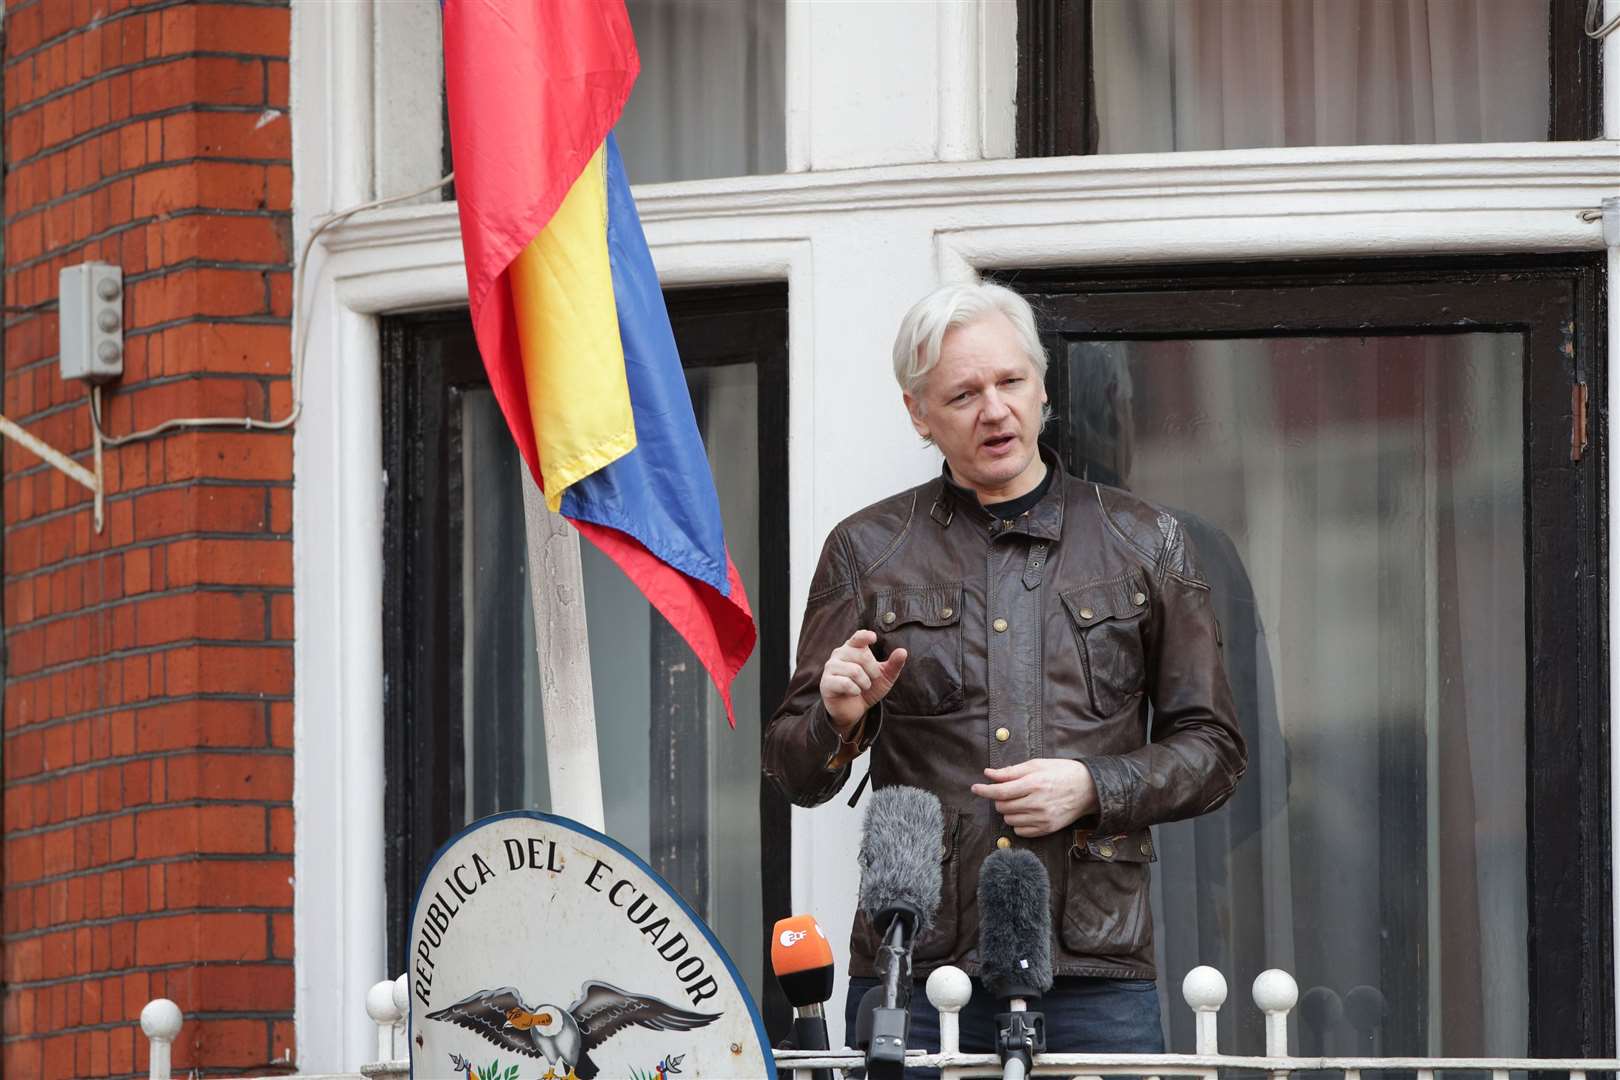 Julian Assange speaking from the balcony of the Ecuadorian embassy in London (Yui Mok/PA)